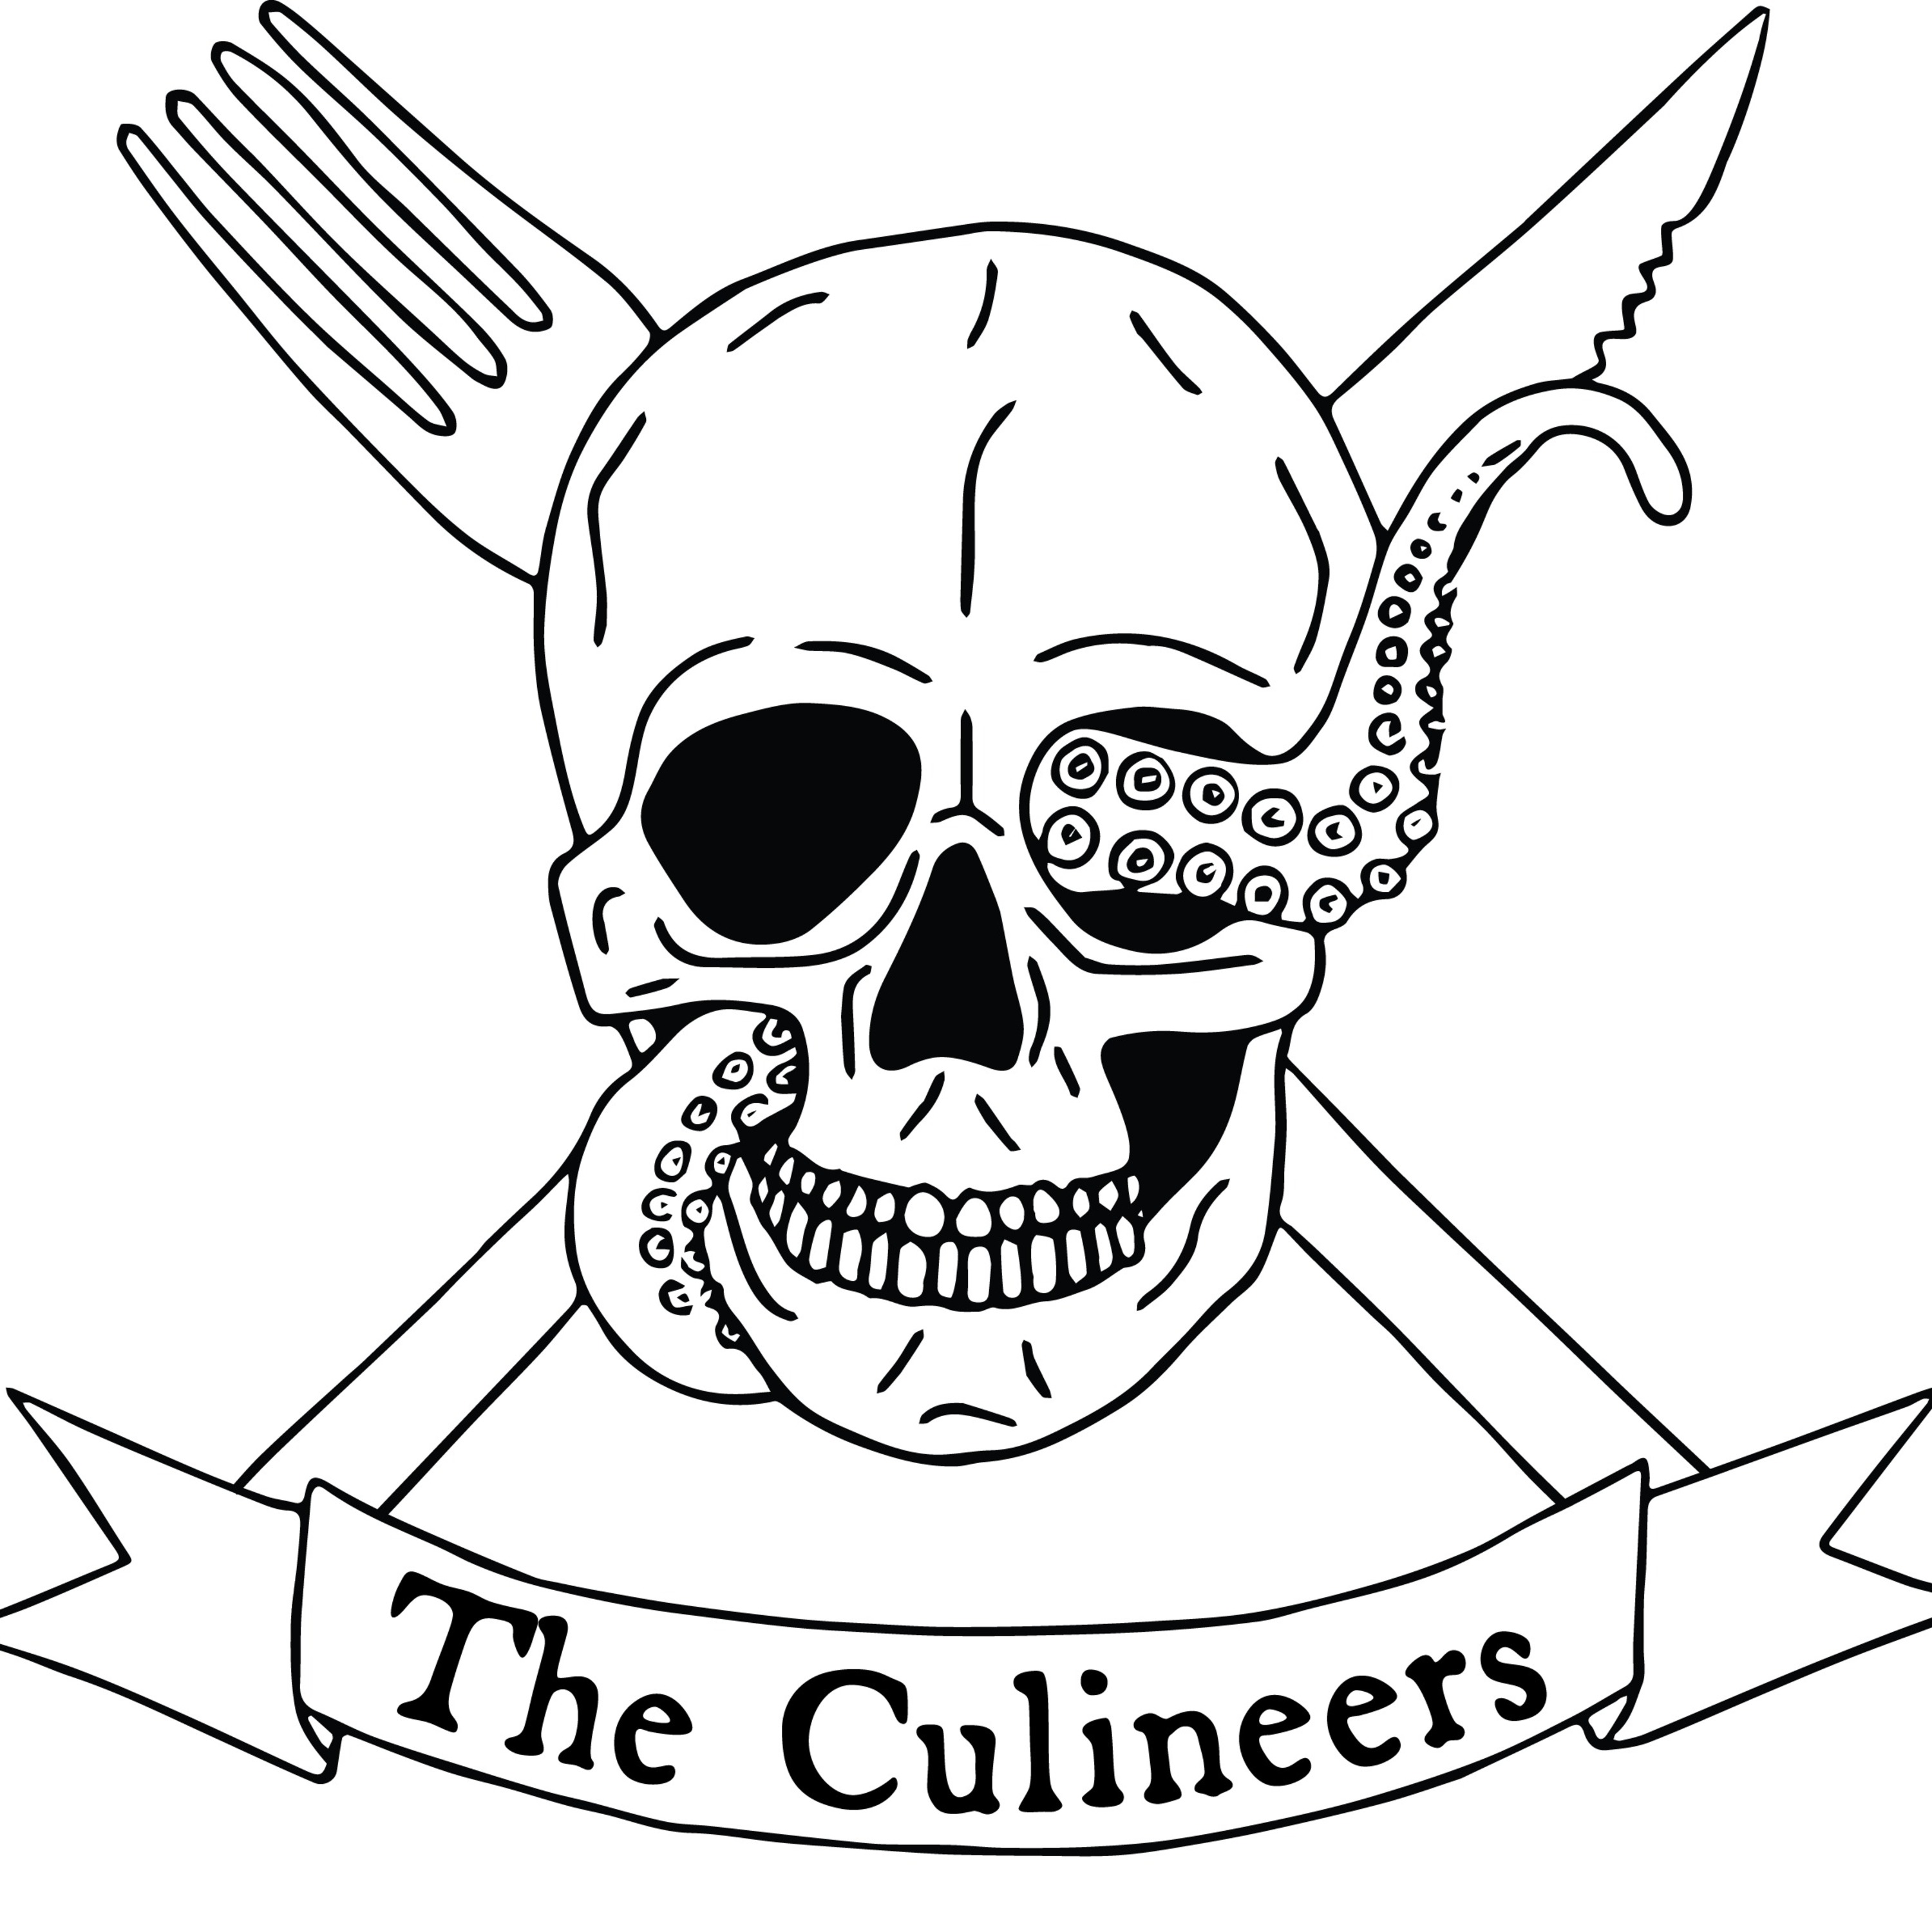 Culineers Radio episode 1 - November 6 - 2016